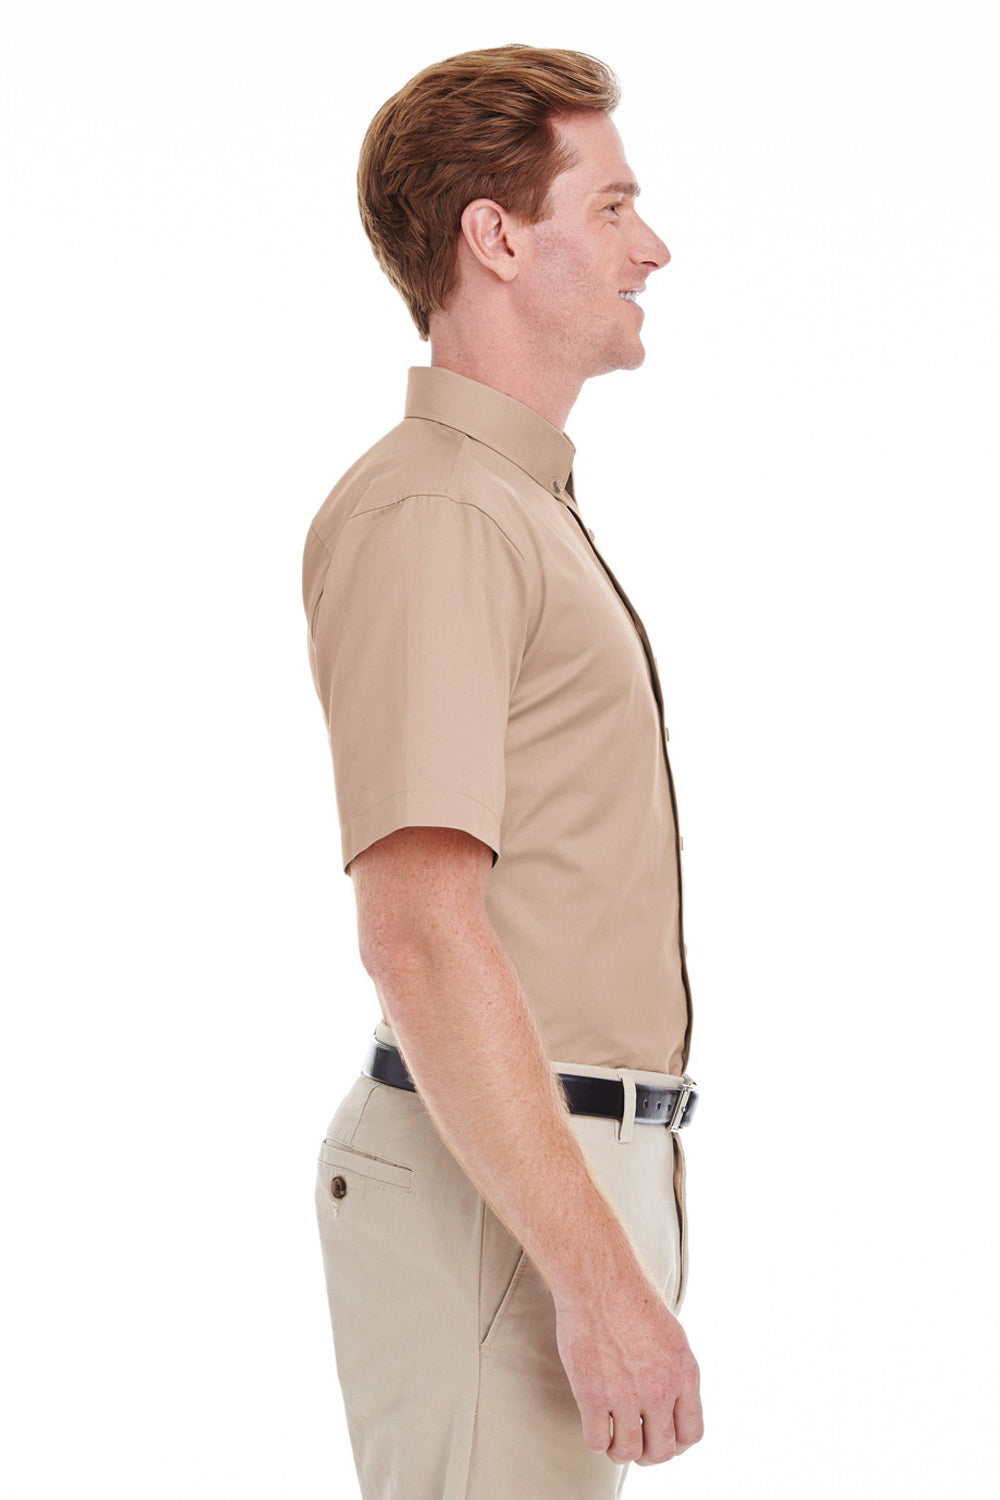 Harriton M582 Mens Foundation Stain Resistant Short Sleeve Button Down Shirt w/ Pocket Khaki Brown Side